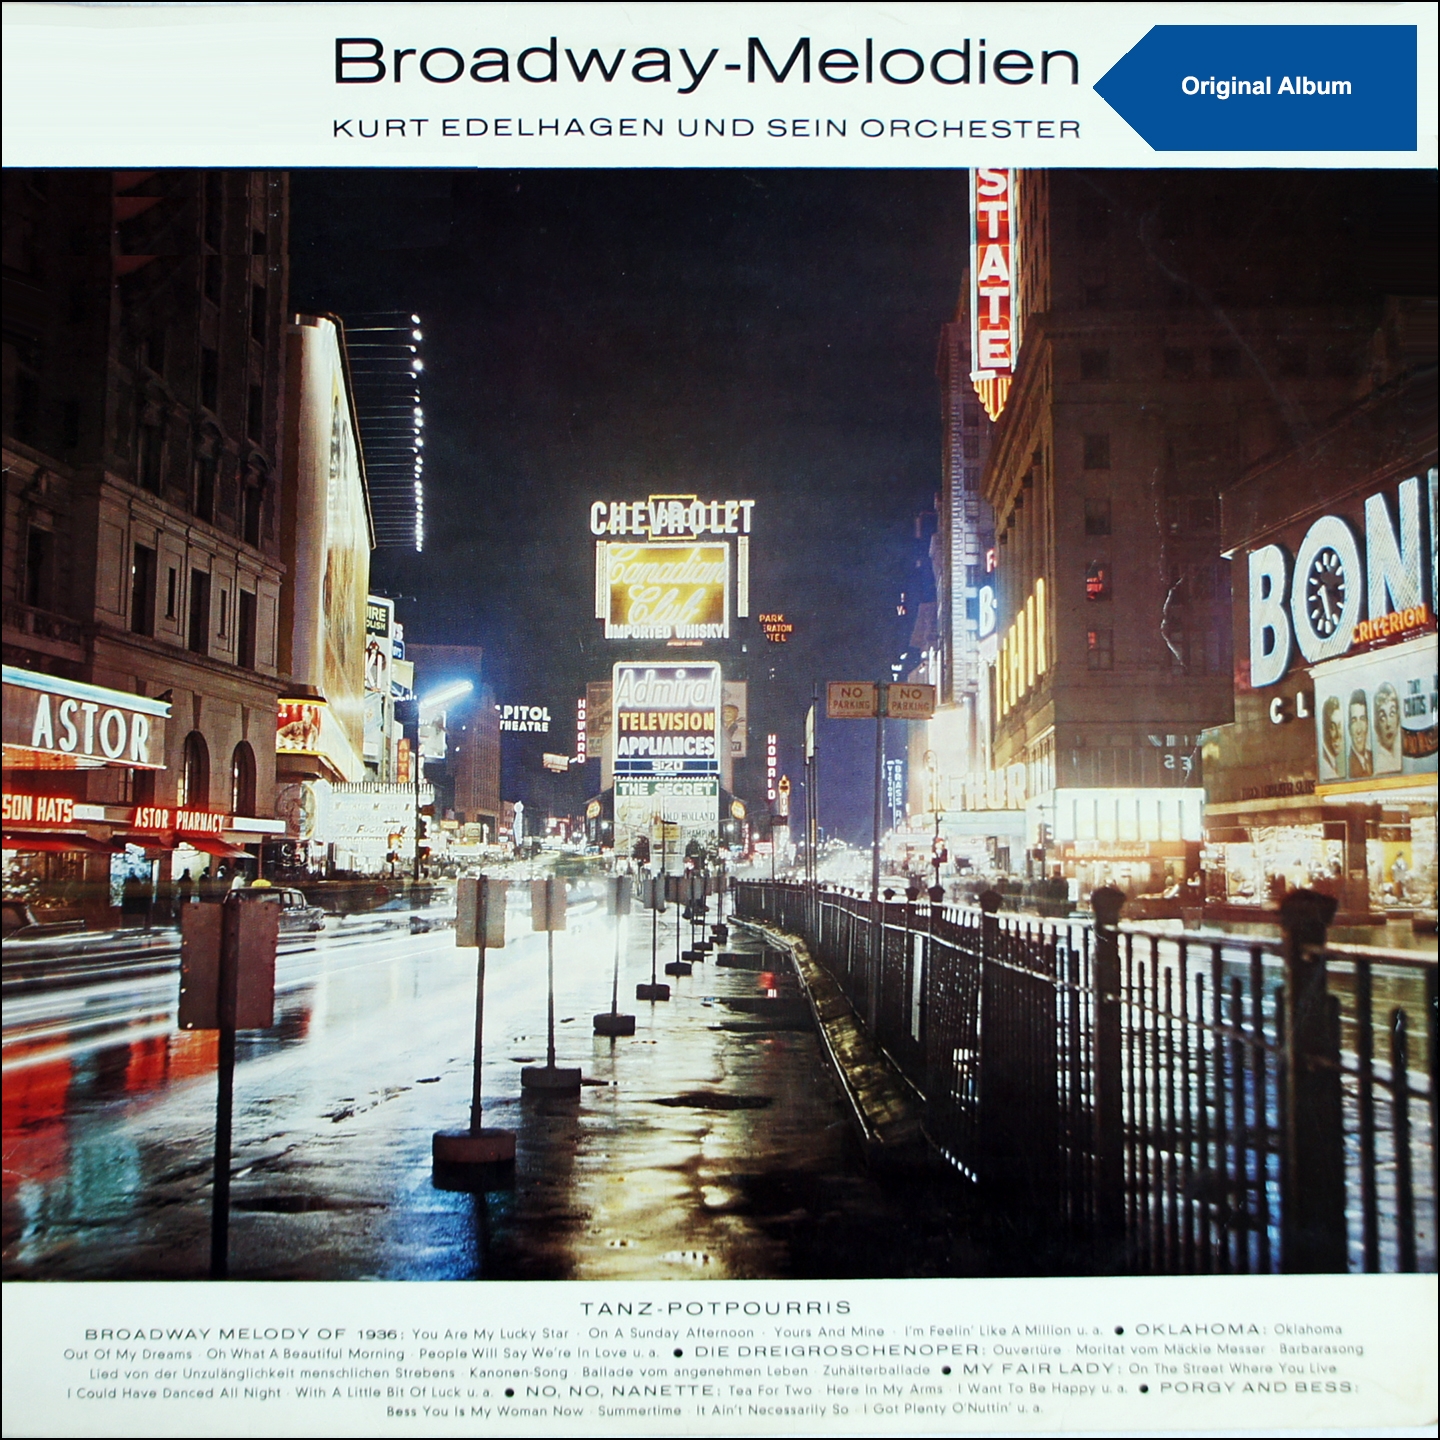 Broadway-melodien - Tanz-potpourries